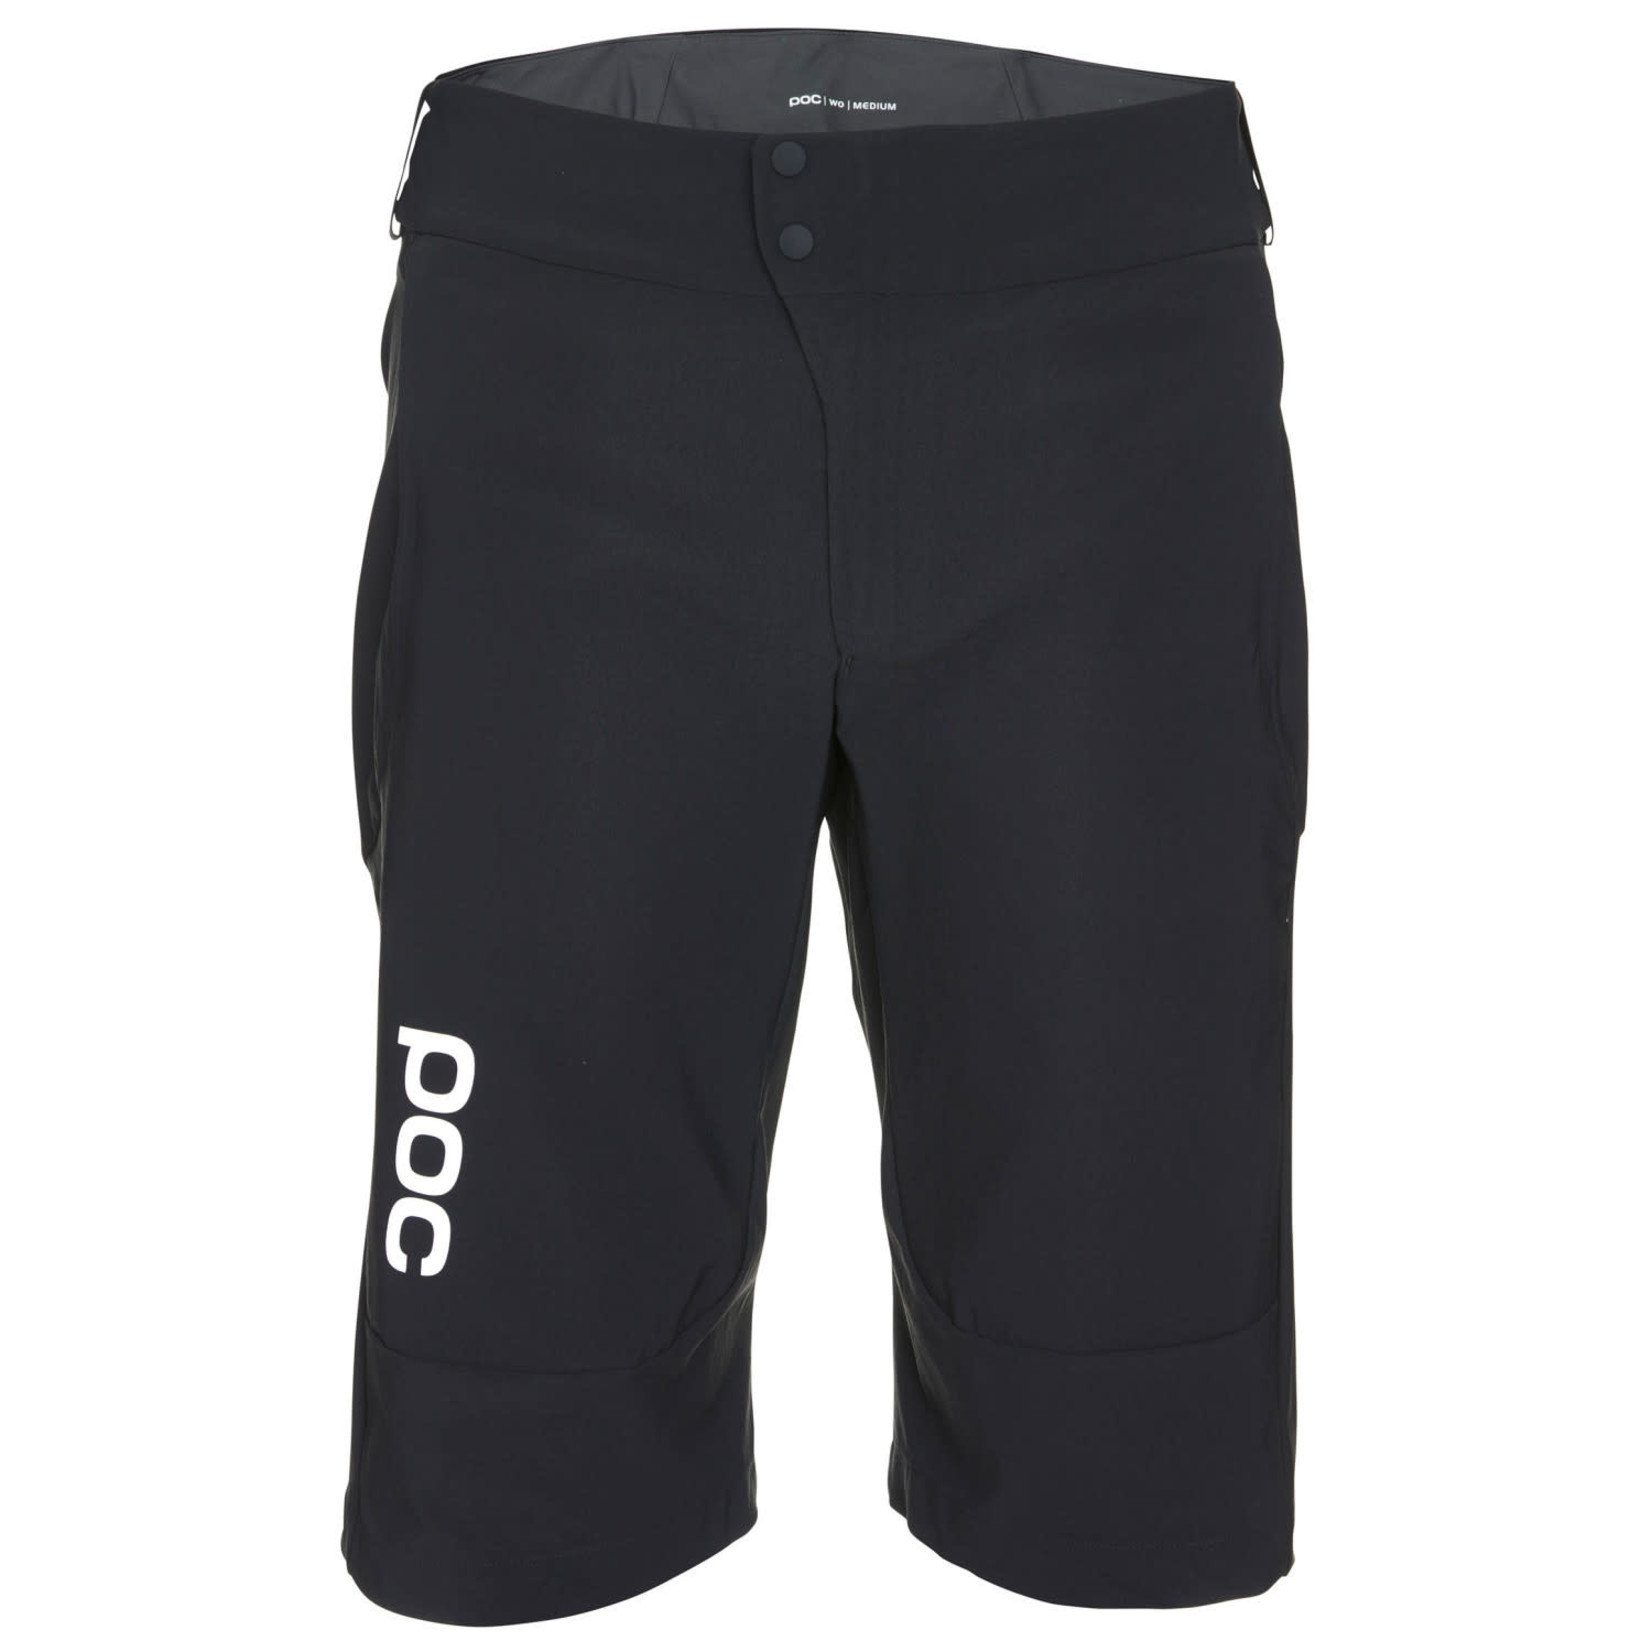 POC '20, POC, Essential Enduro Shorts, Men's